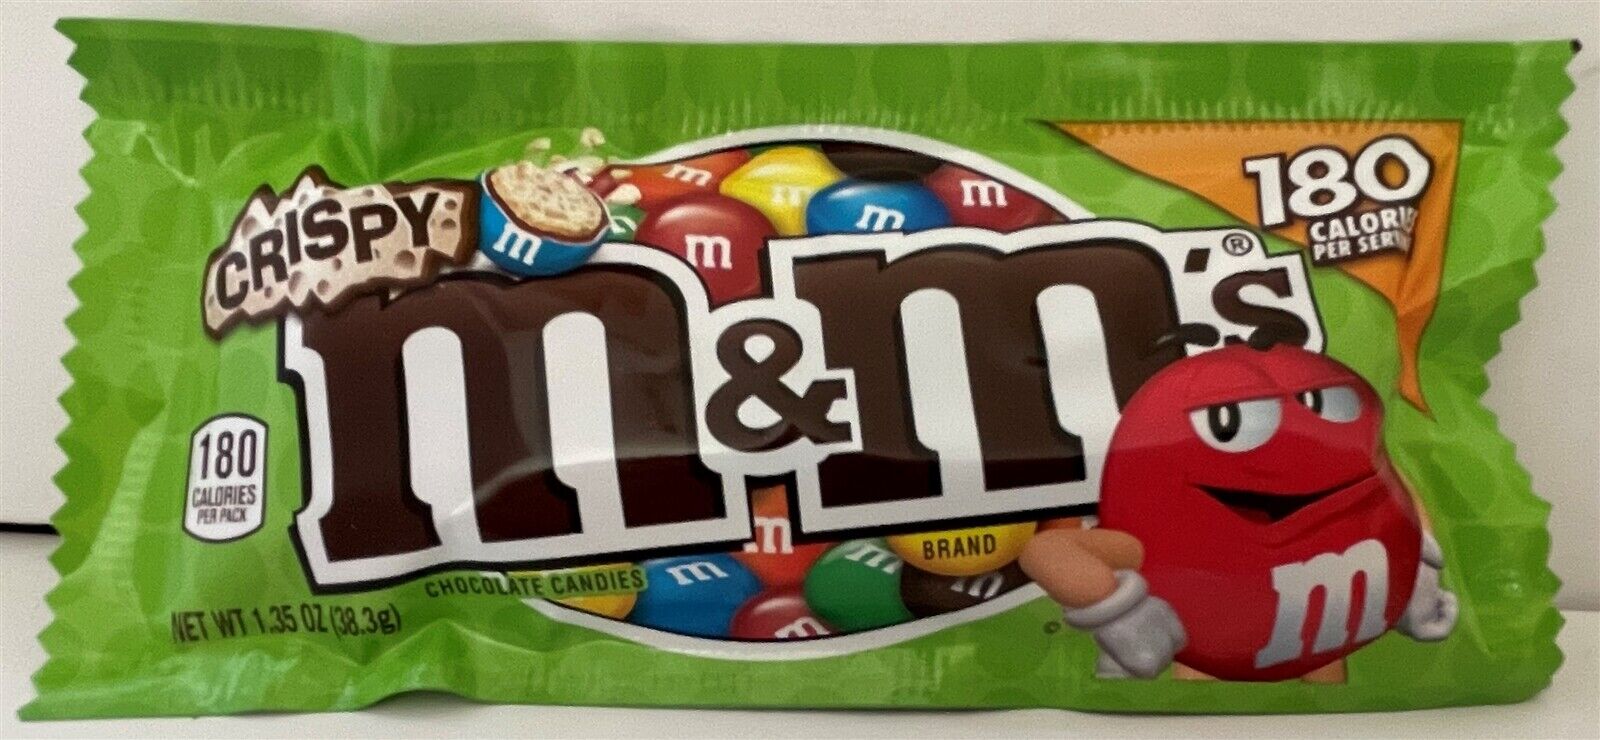 m&m\'s CRISPY chocolate candies USA - 1.35 oz green bag - UPC upper-left corner